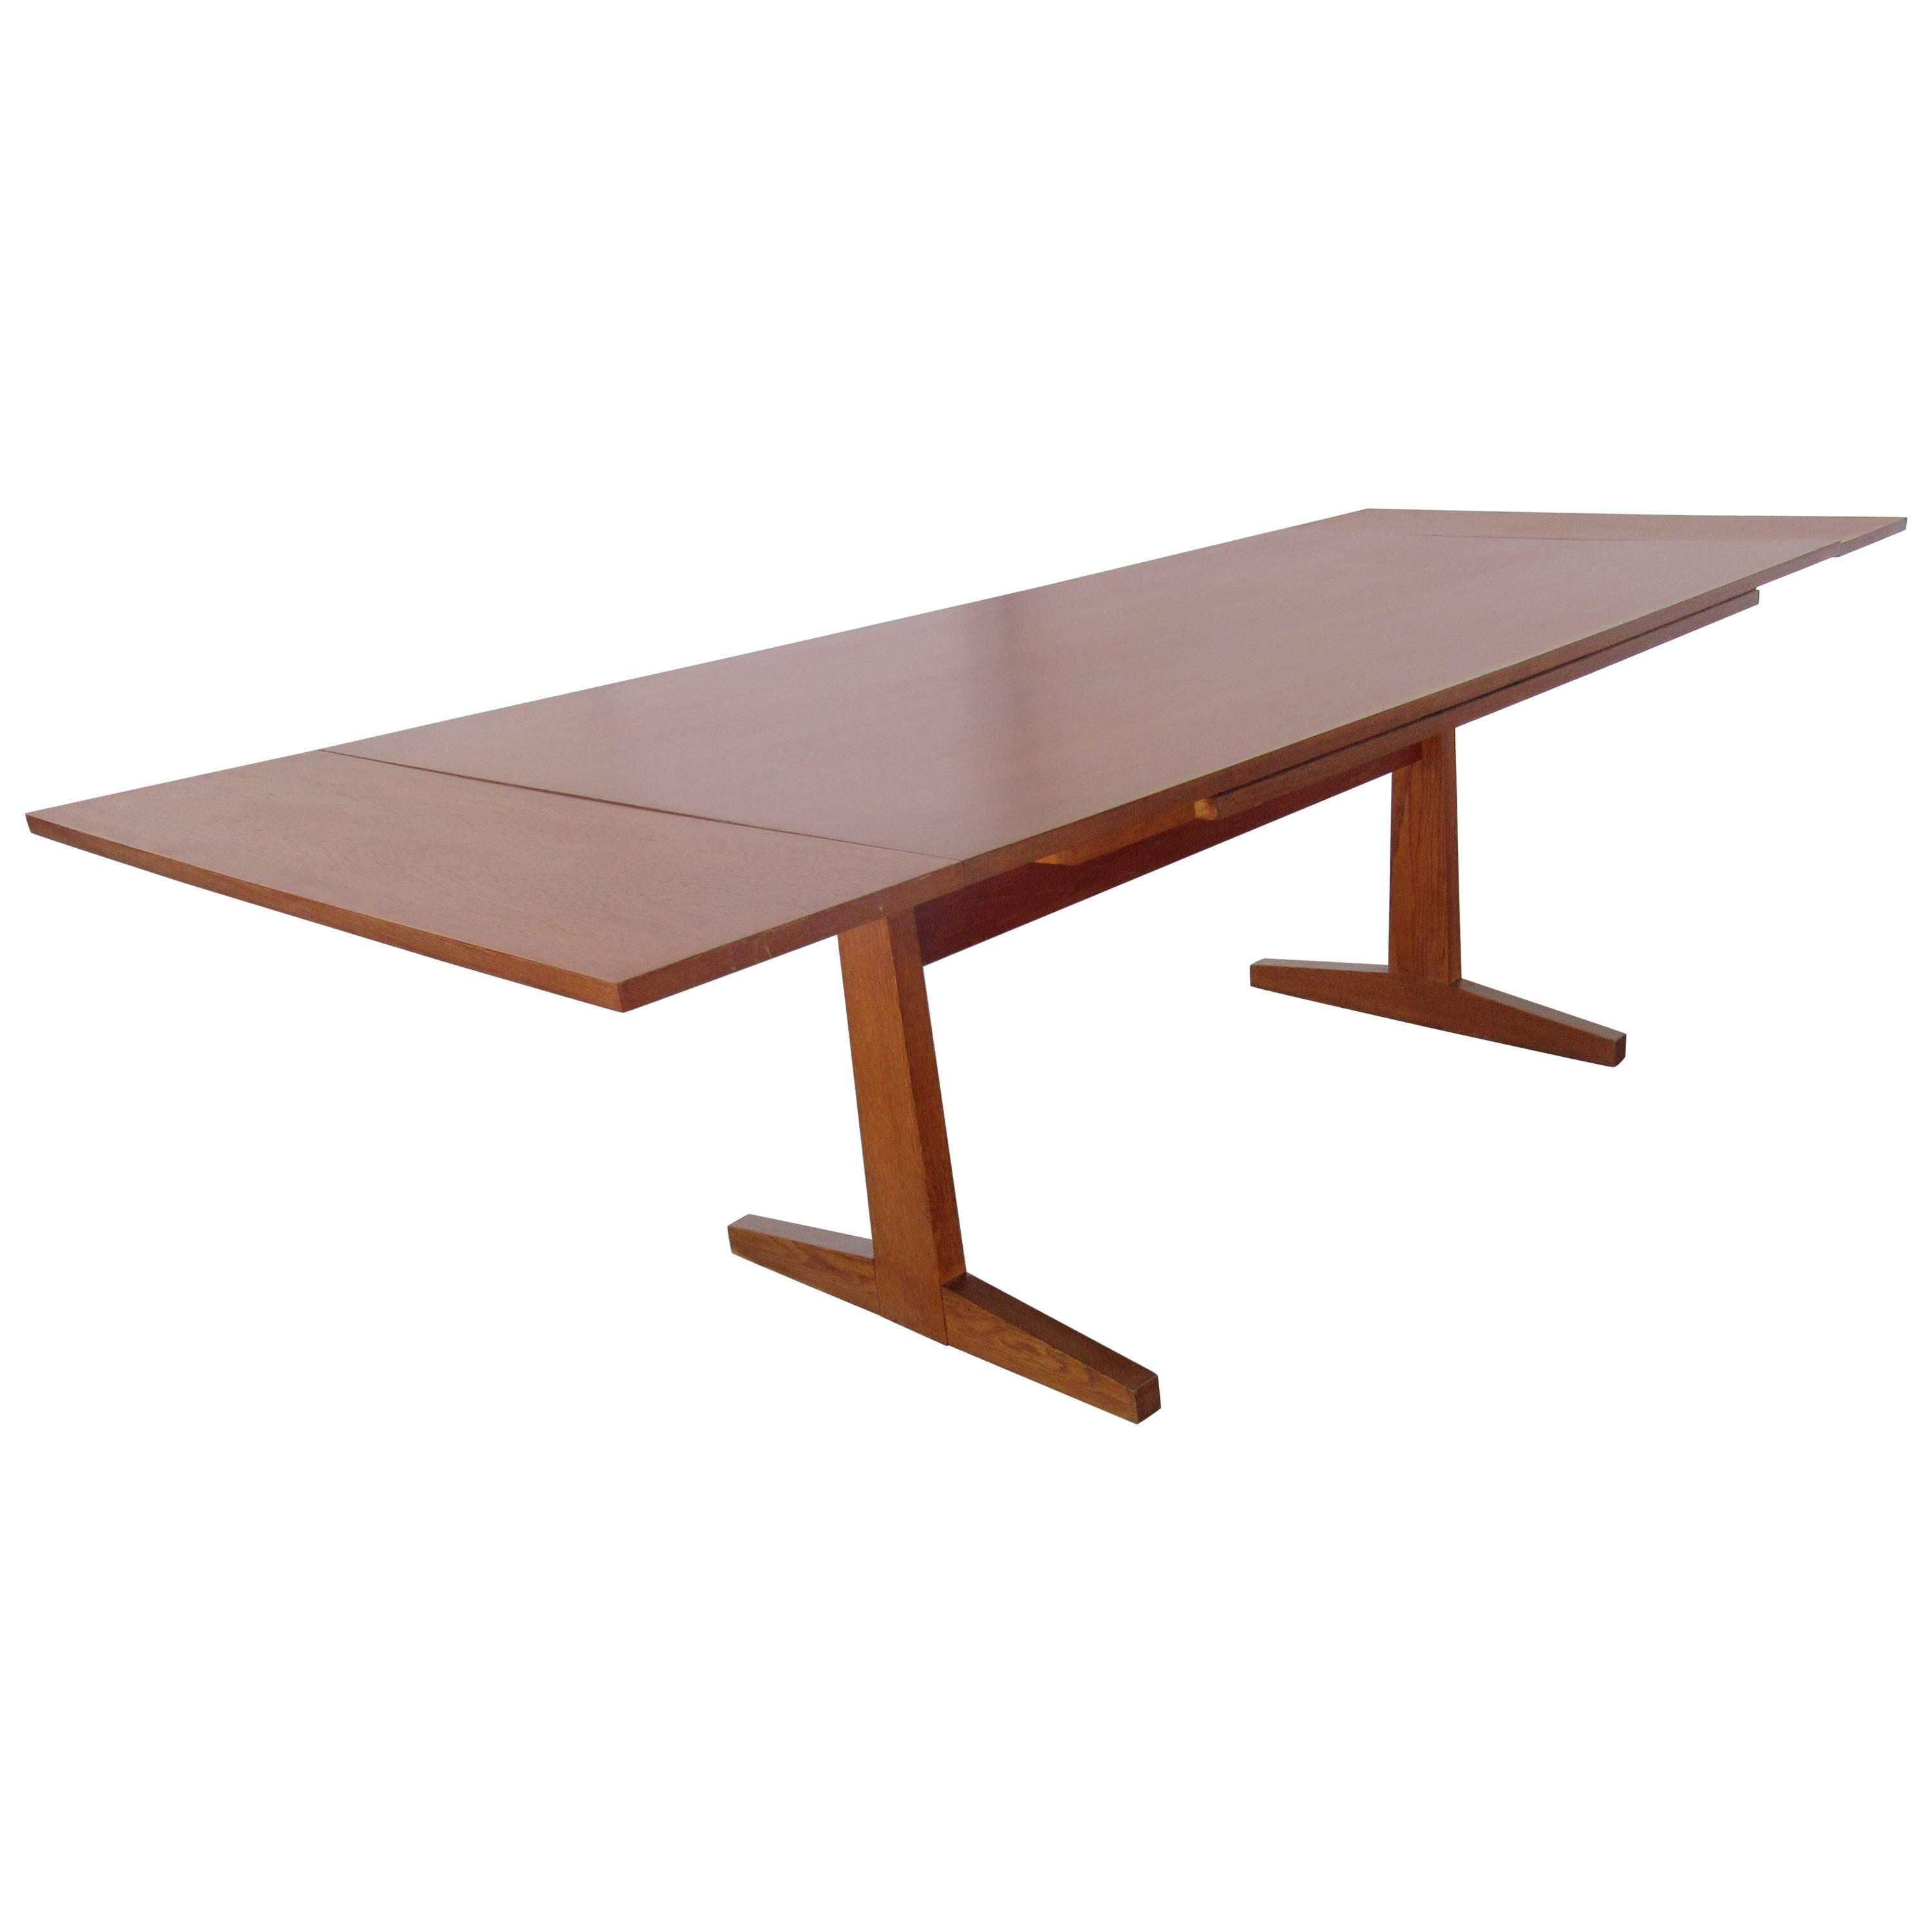 Danish Modern Teak Extending Table with Pedestal Base, 1960s For Sale